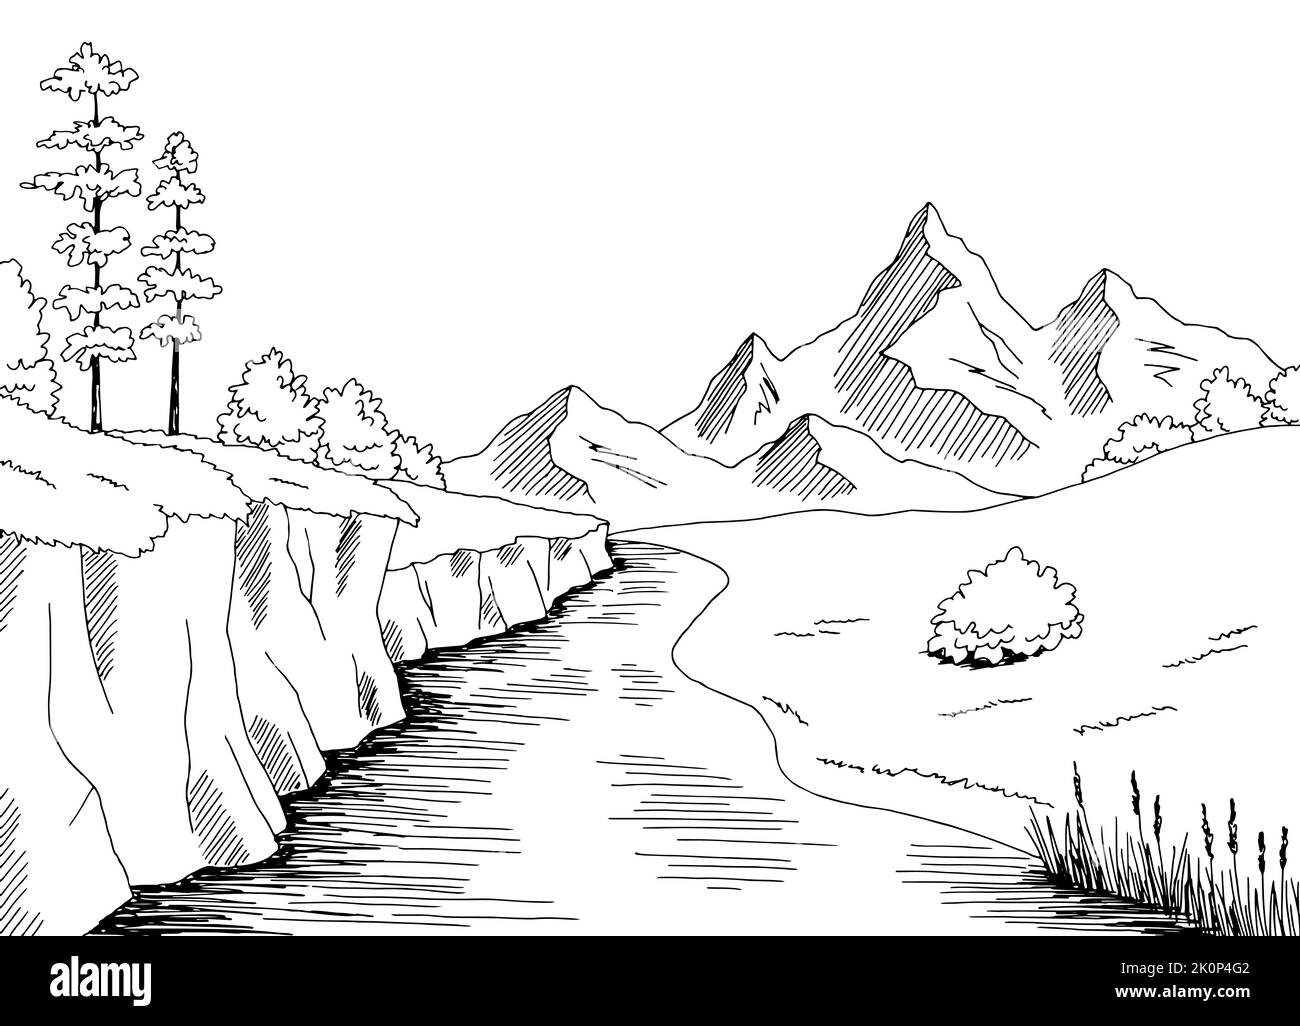 Mountain River Grafik schwarz weiß Landschaft Skizze Illustration Vektor Stock Vektor